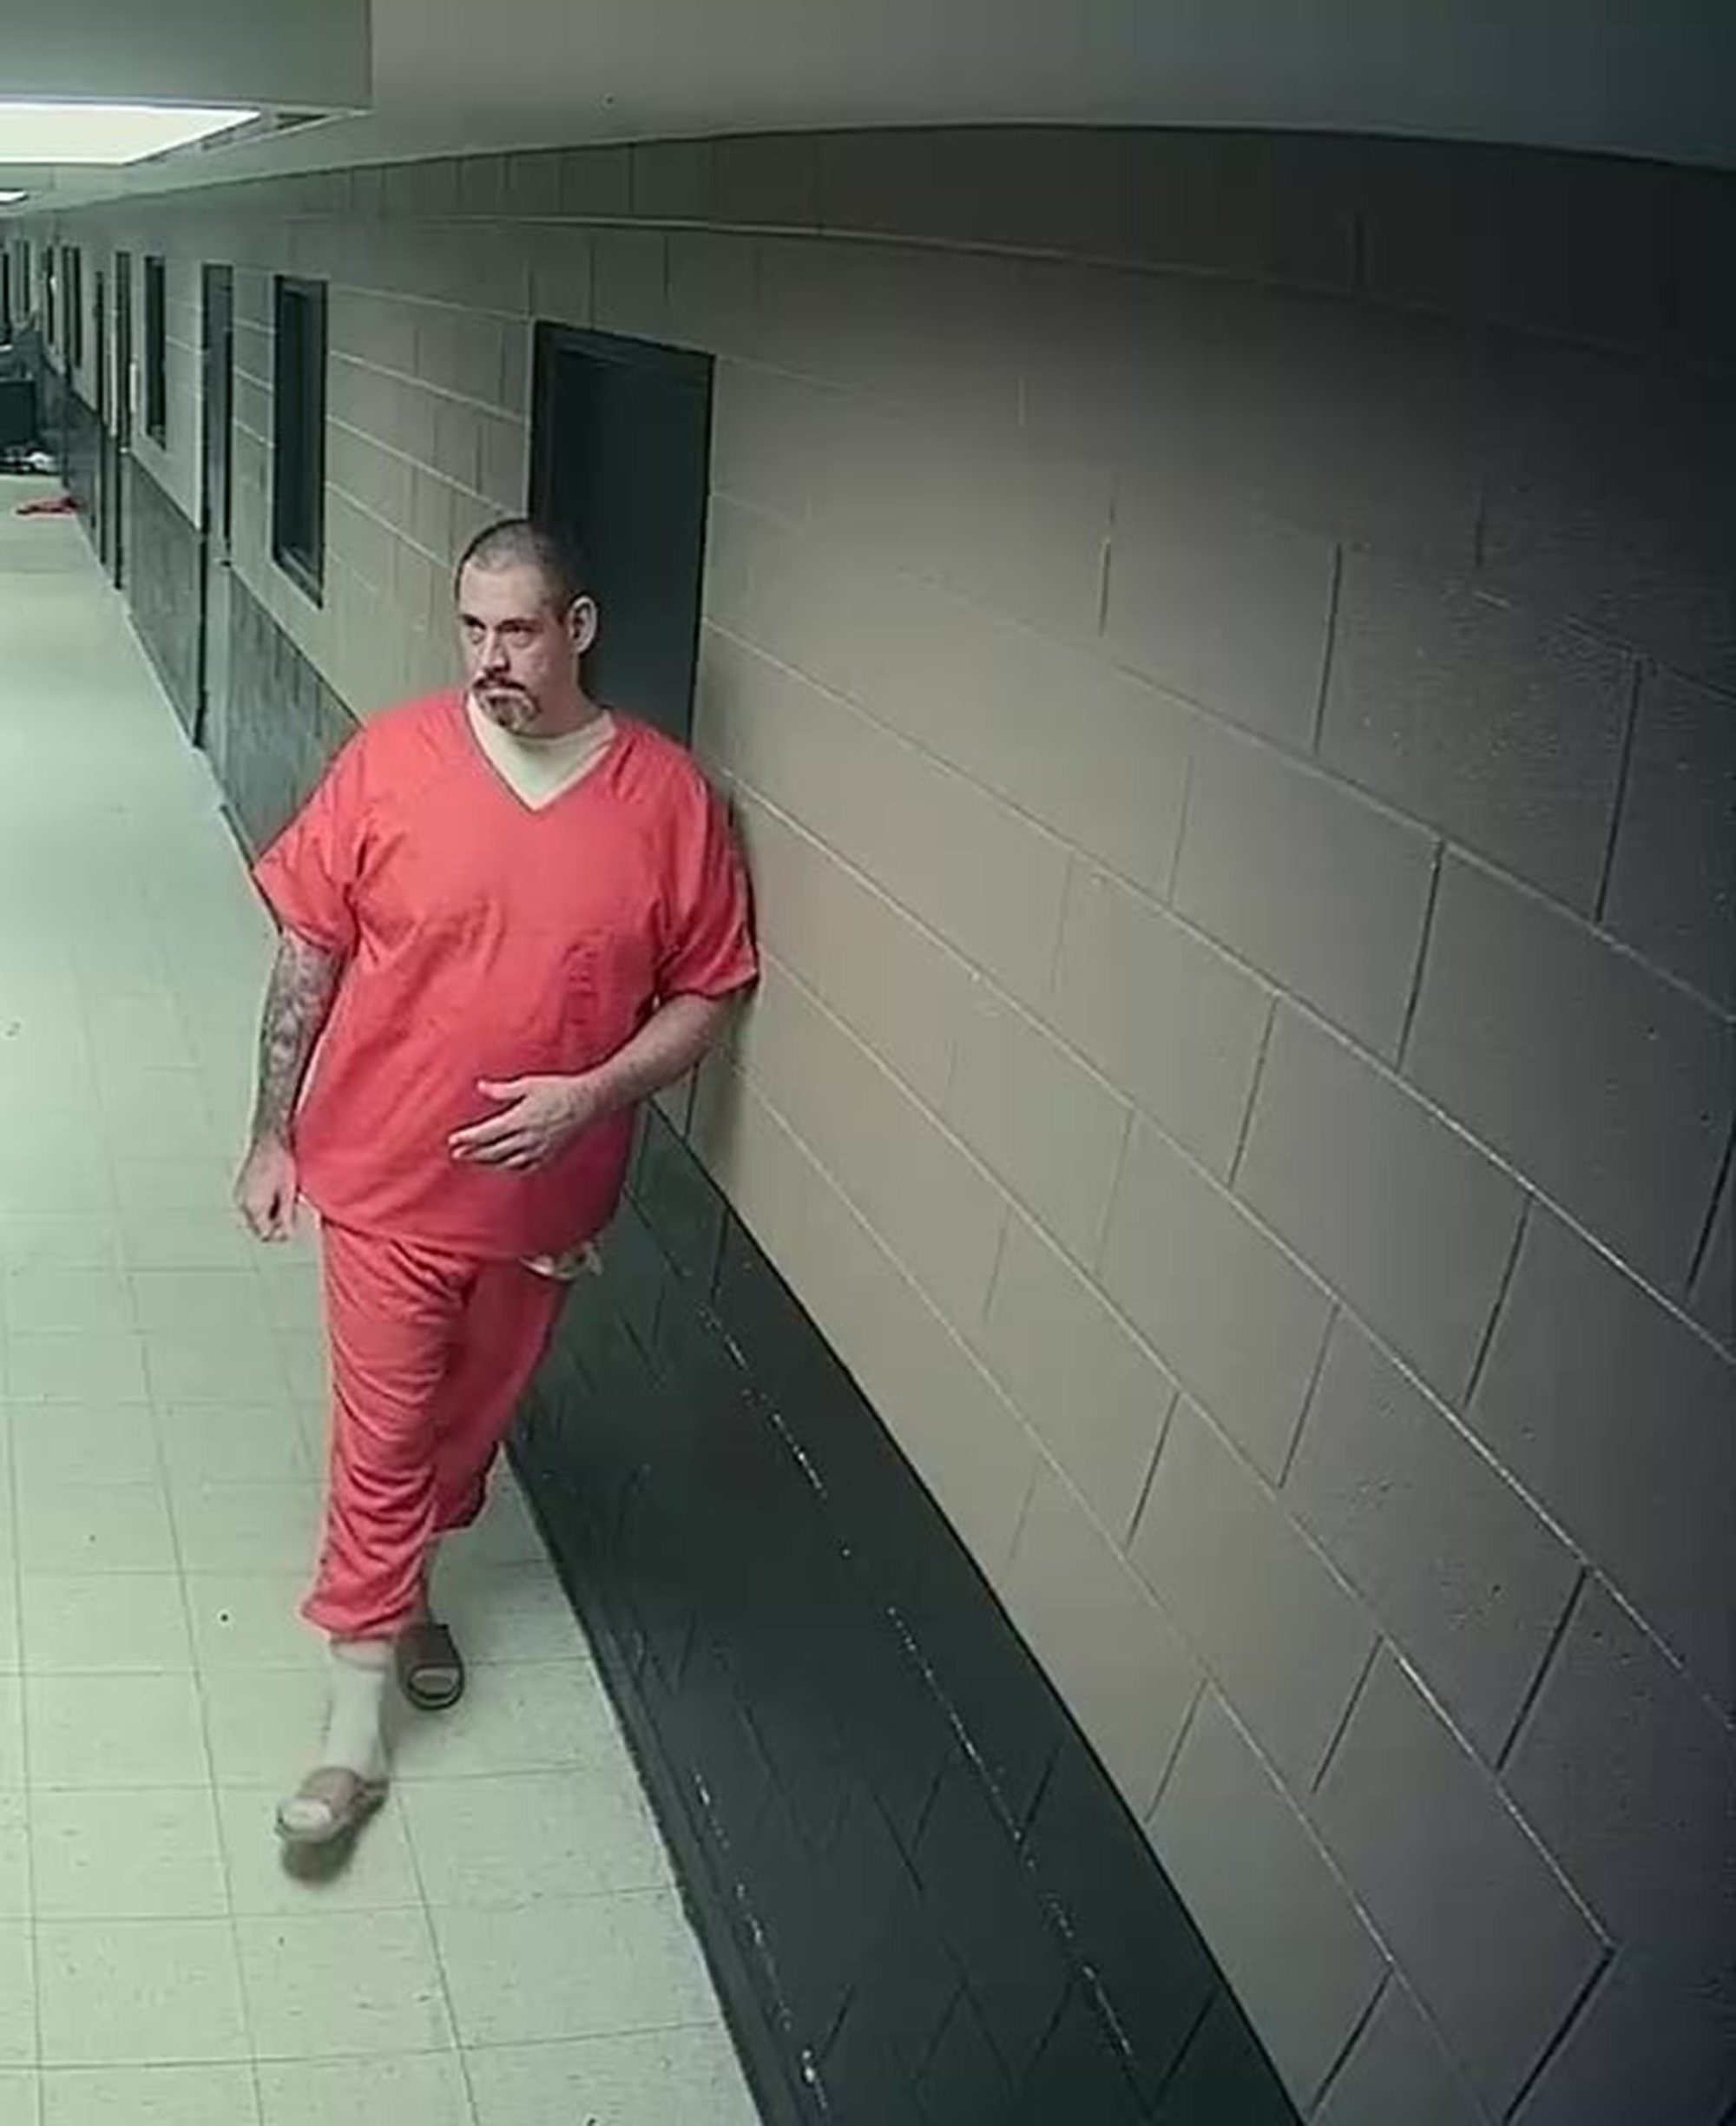 Fugitive Alabama Inmate Casey White Captured After 10 Day Manhunt Ex Prison Officer Vicky White 3774